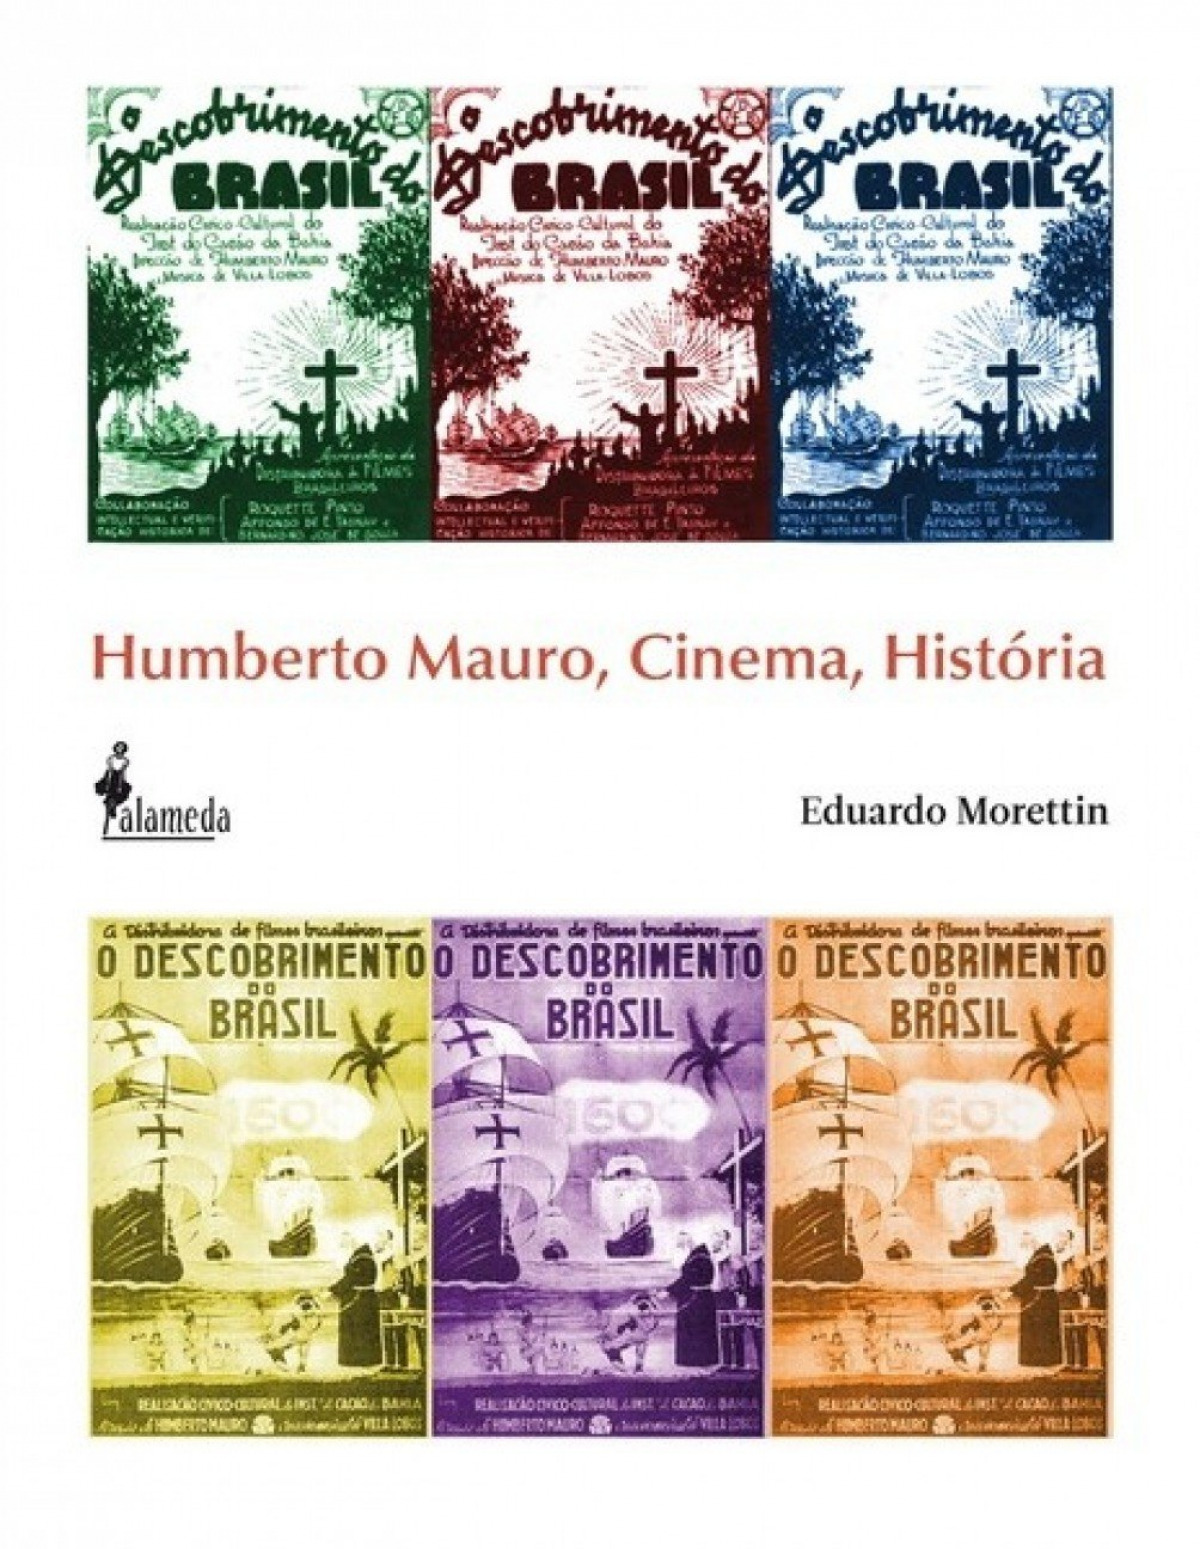 Humberto mauro, cinema, historia - Eduardo Morettin